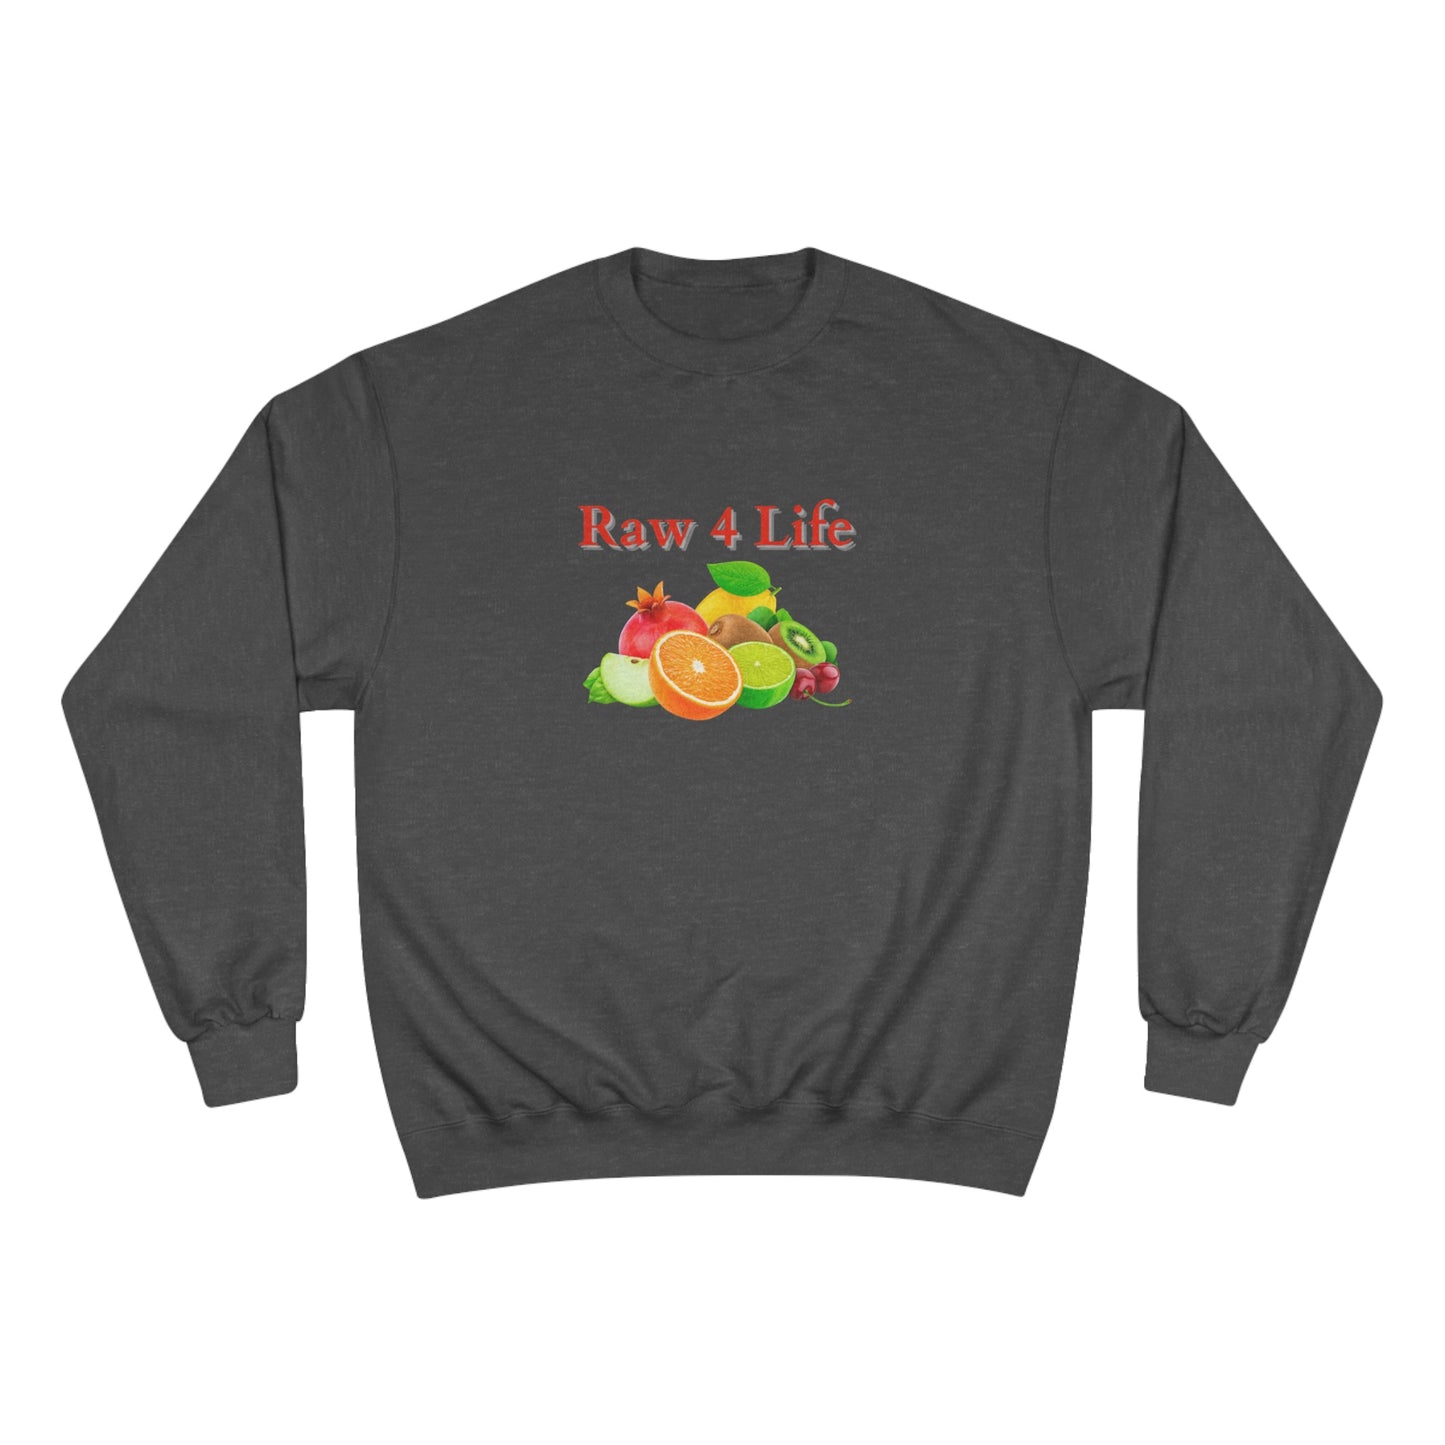 Raw 4 Life - Champion Sweatshirt